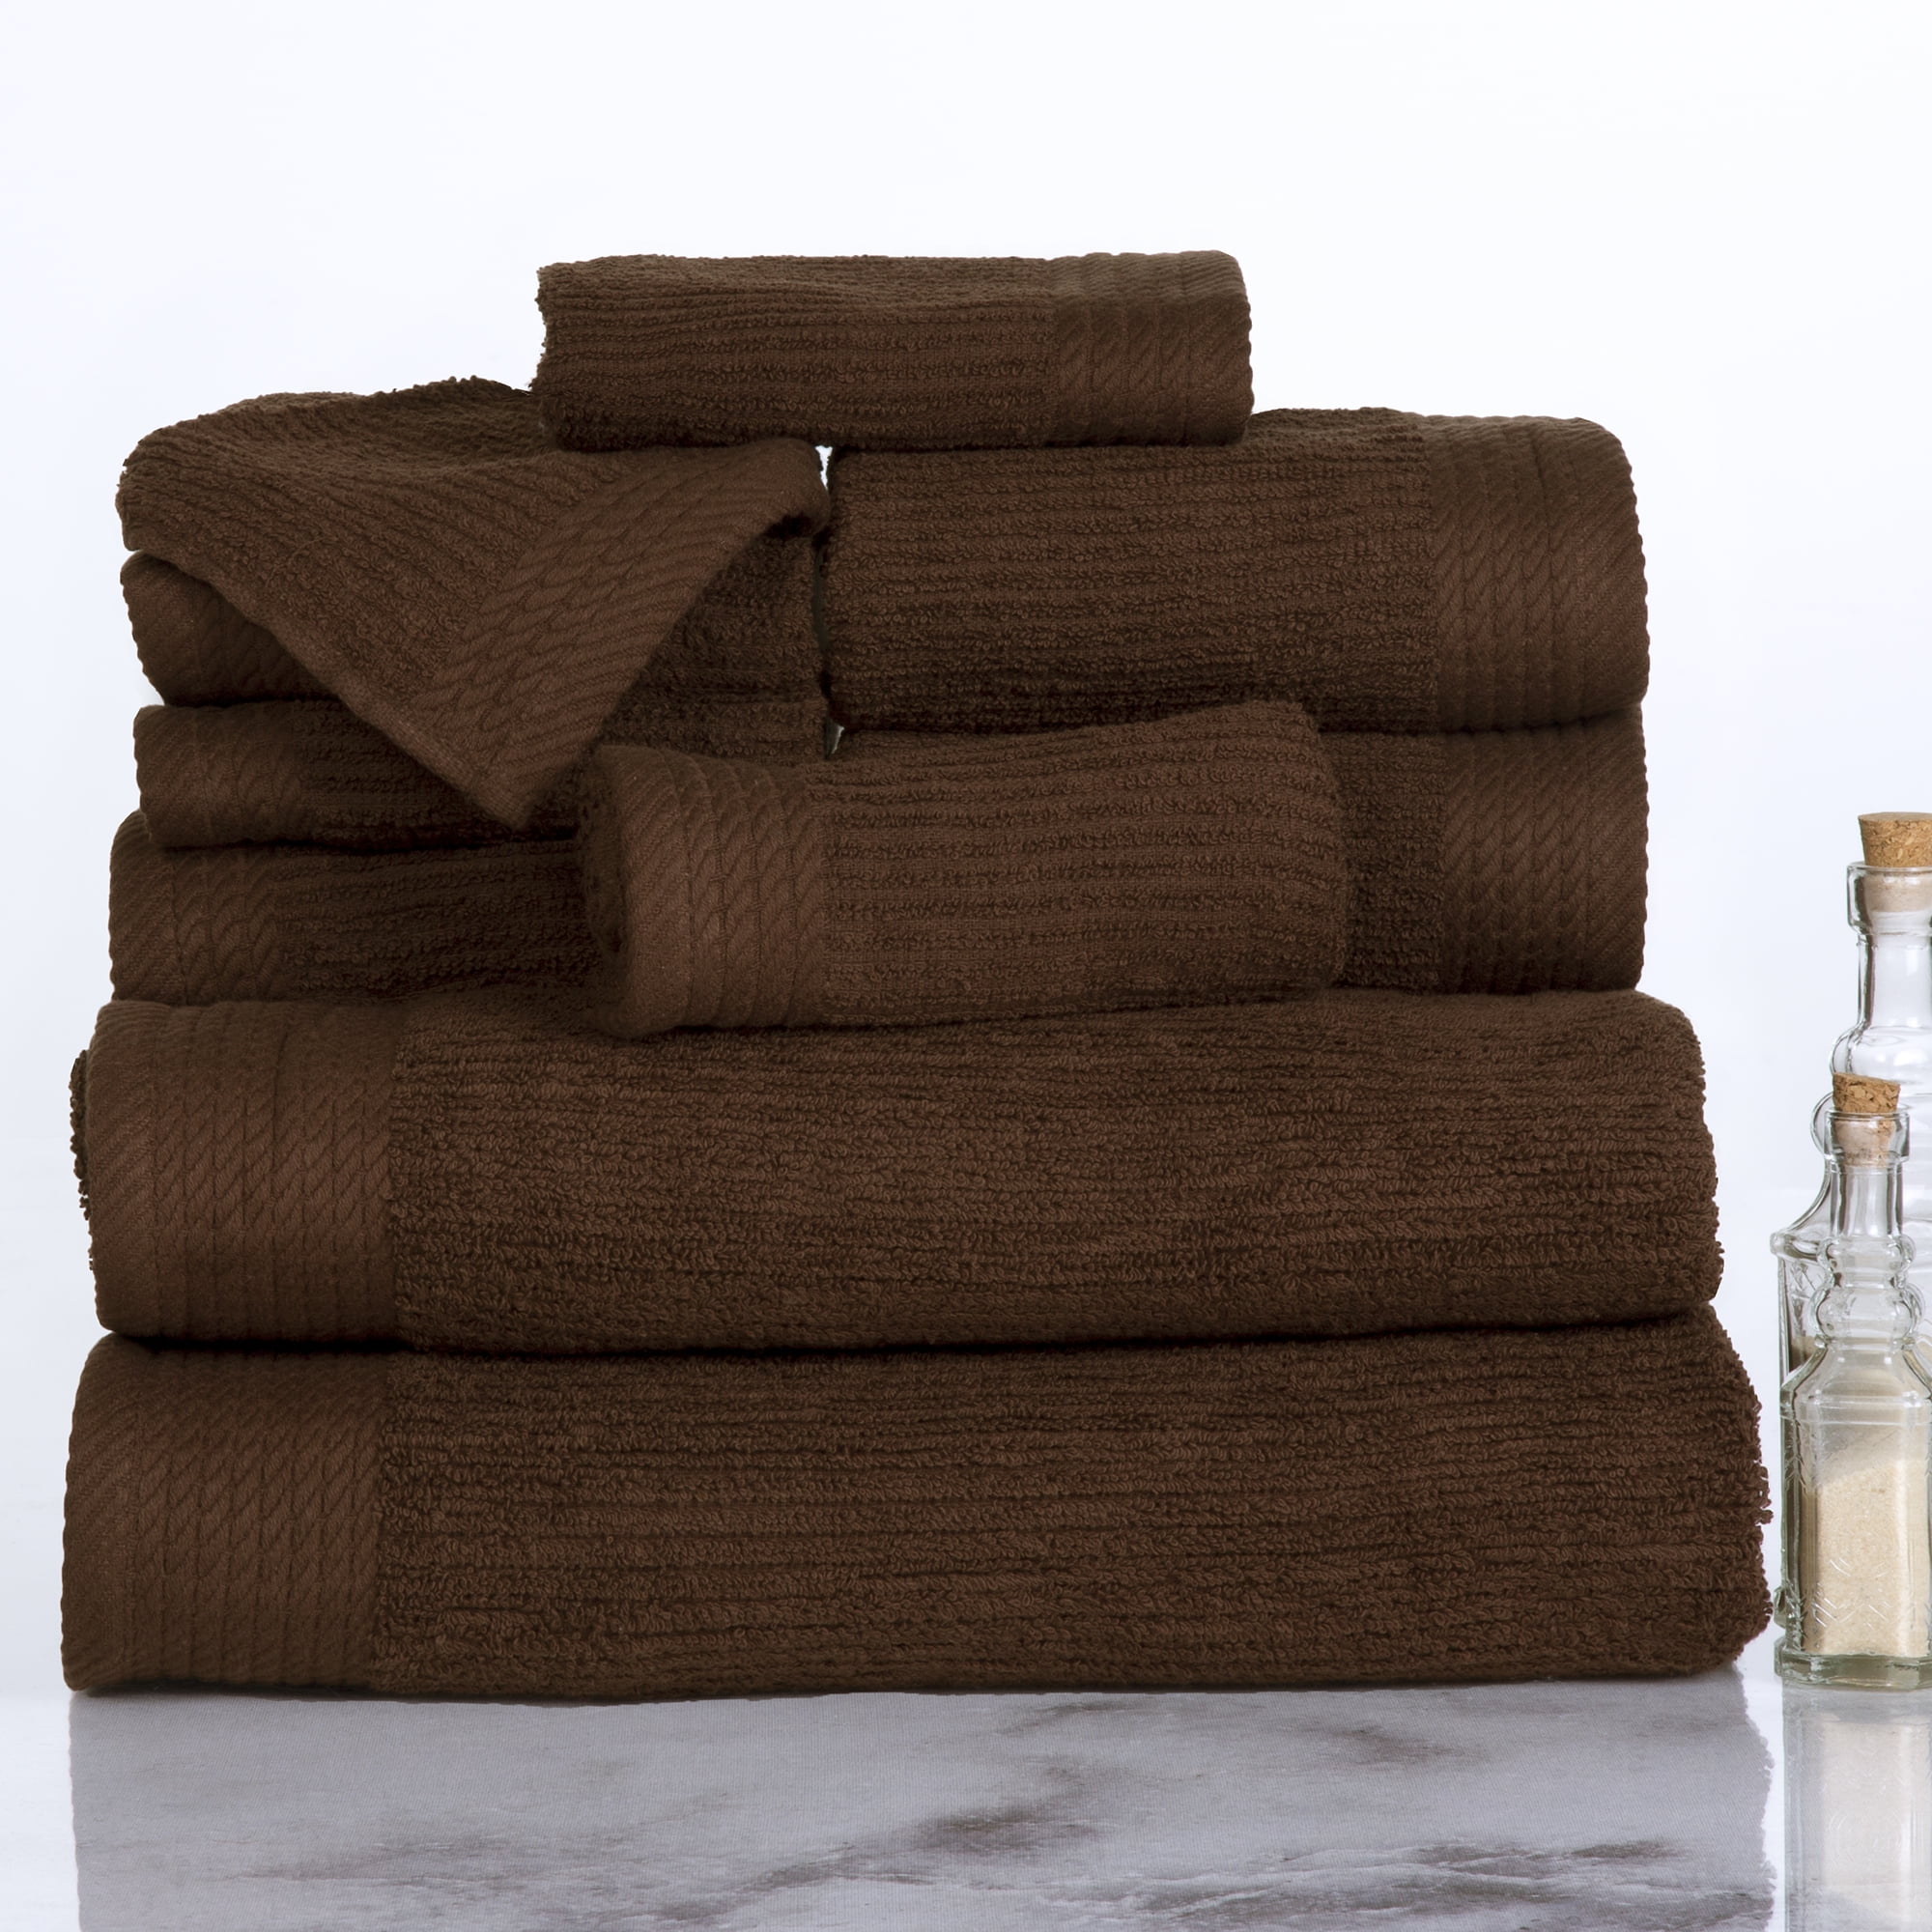 SH Ribbed Cotton 10 Piece Towel Set - Chocolate - Walmart.com